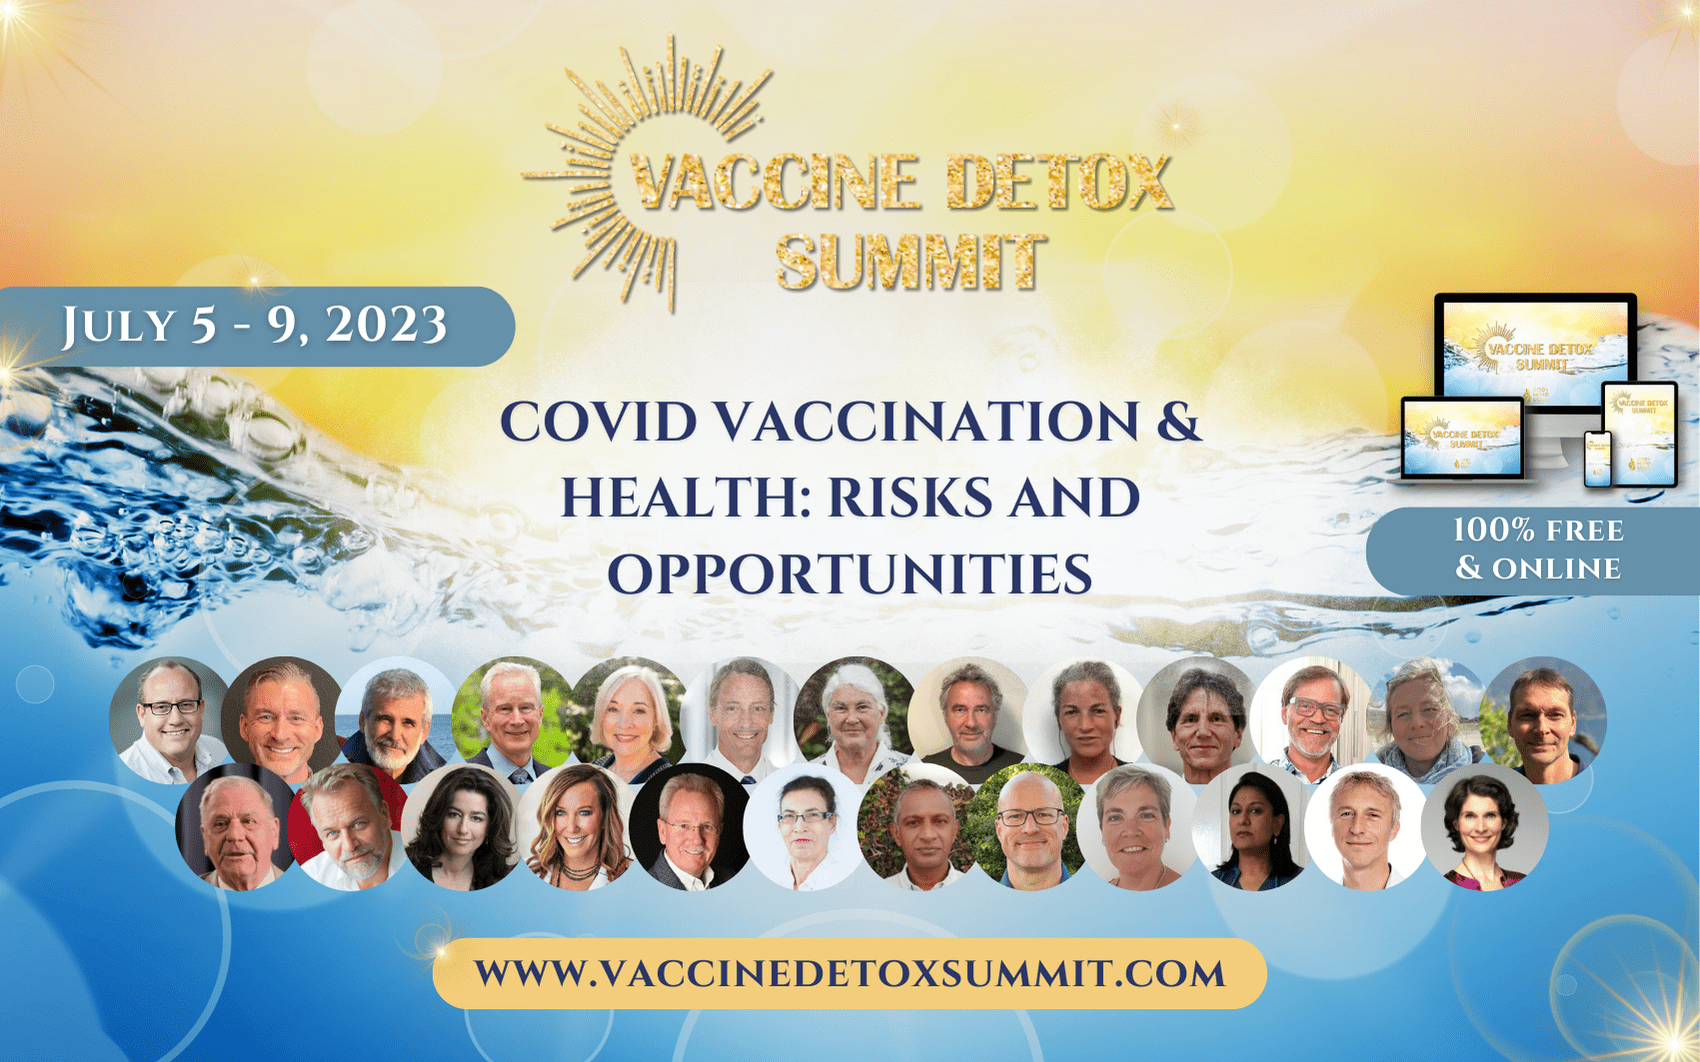 Vaccine Detox Summit 2023